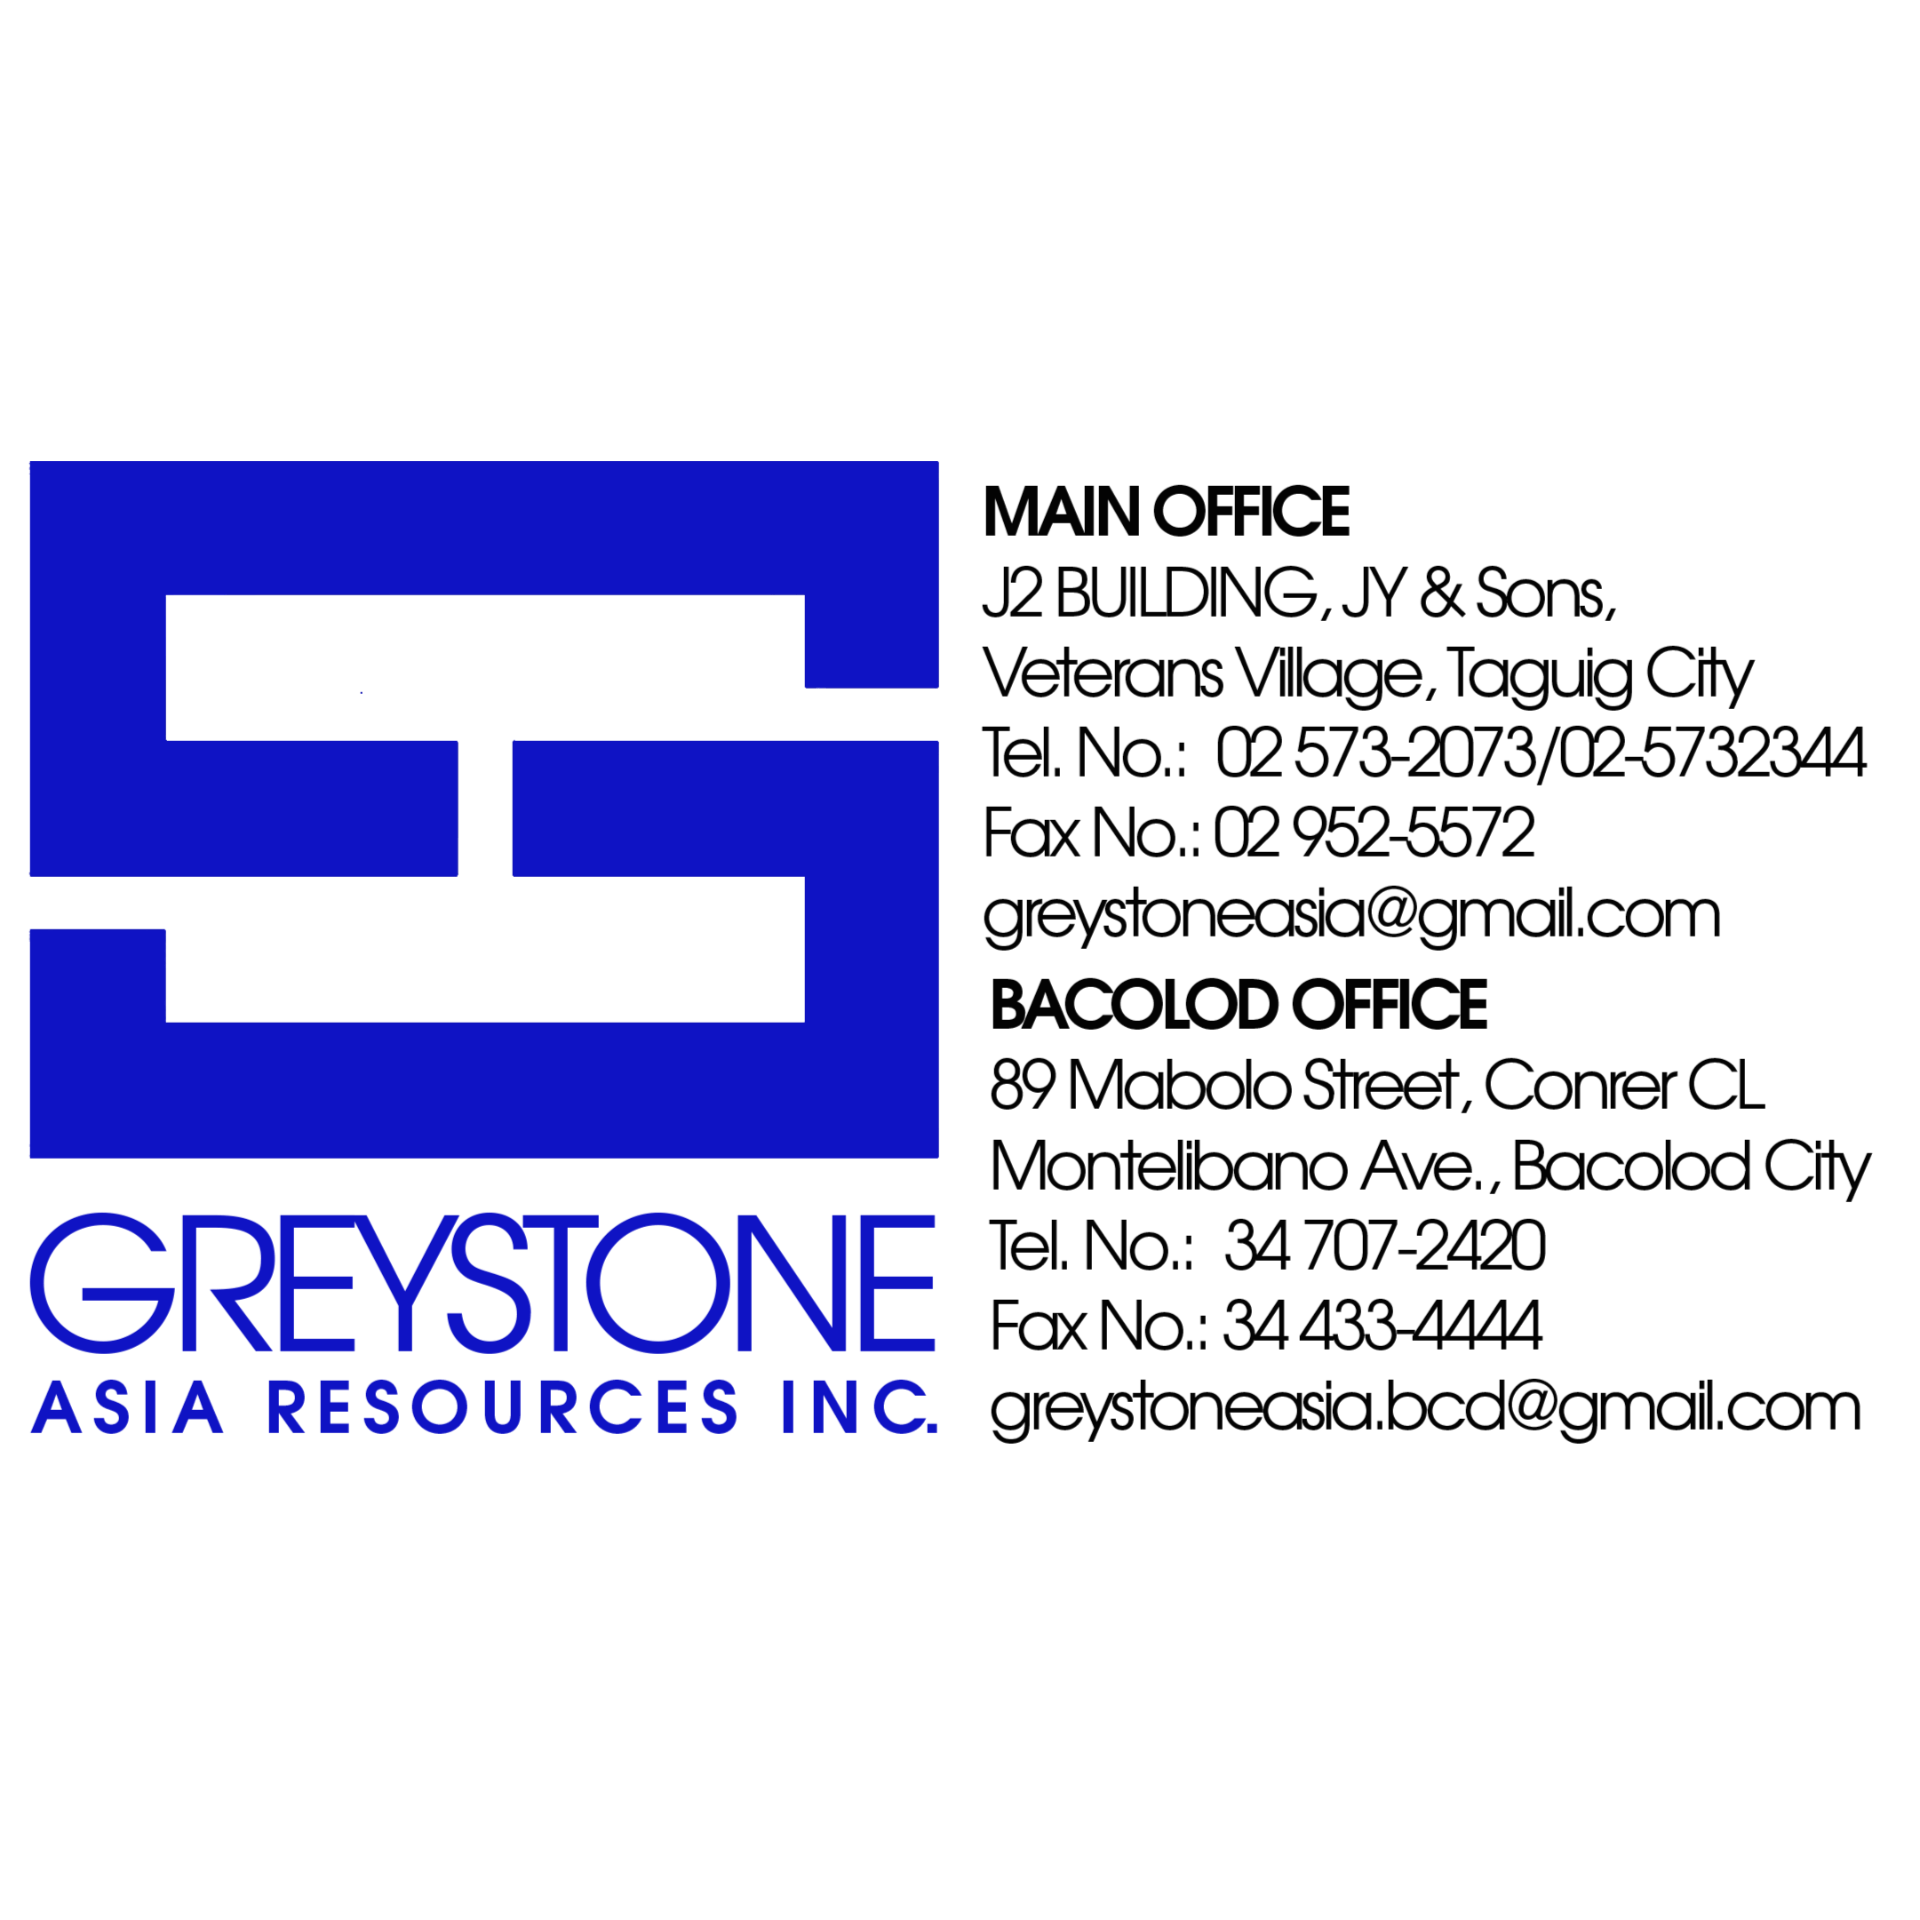 Greystone Asia Resources, Inc. logo